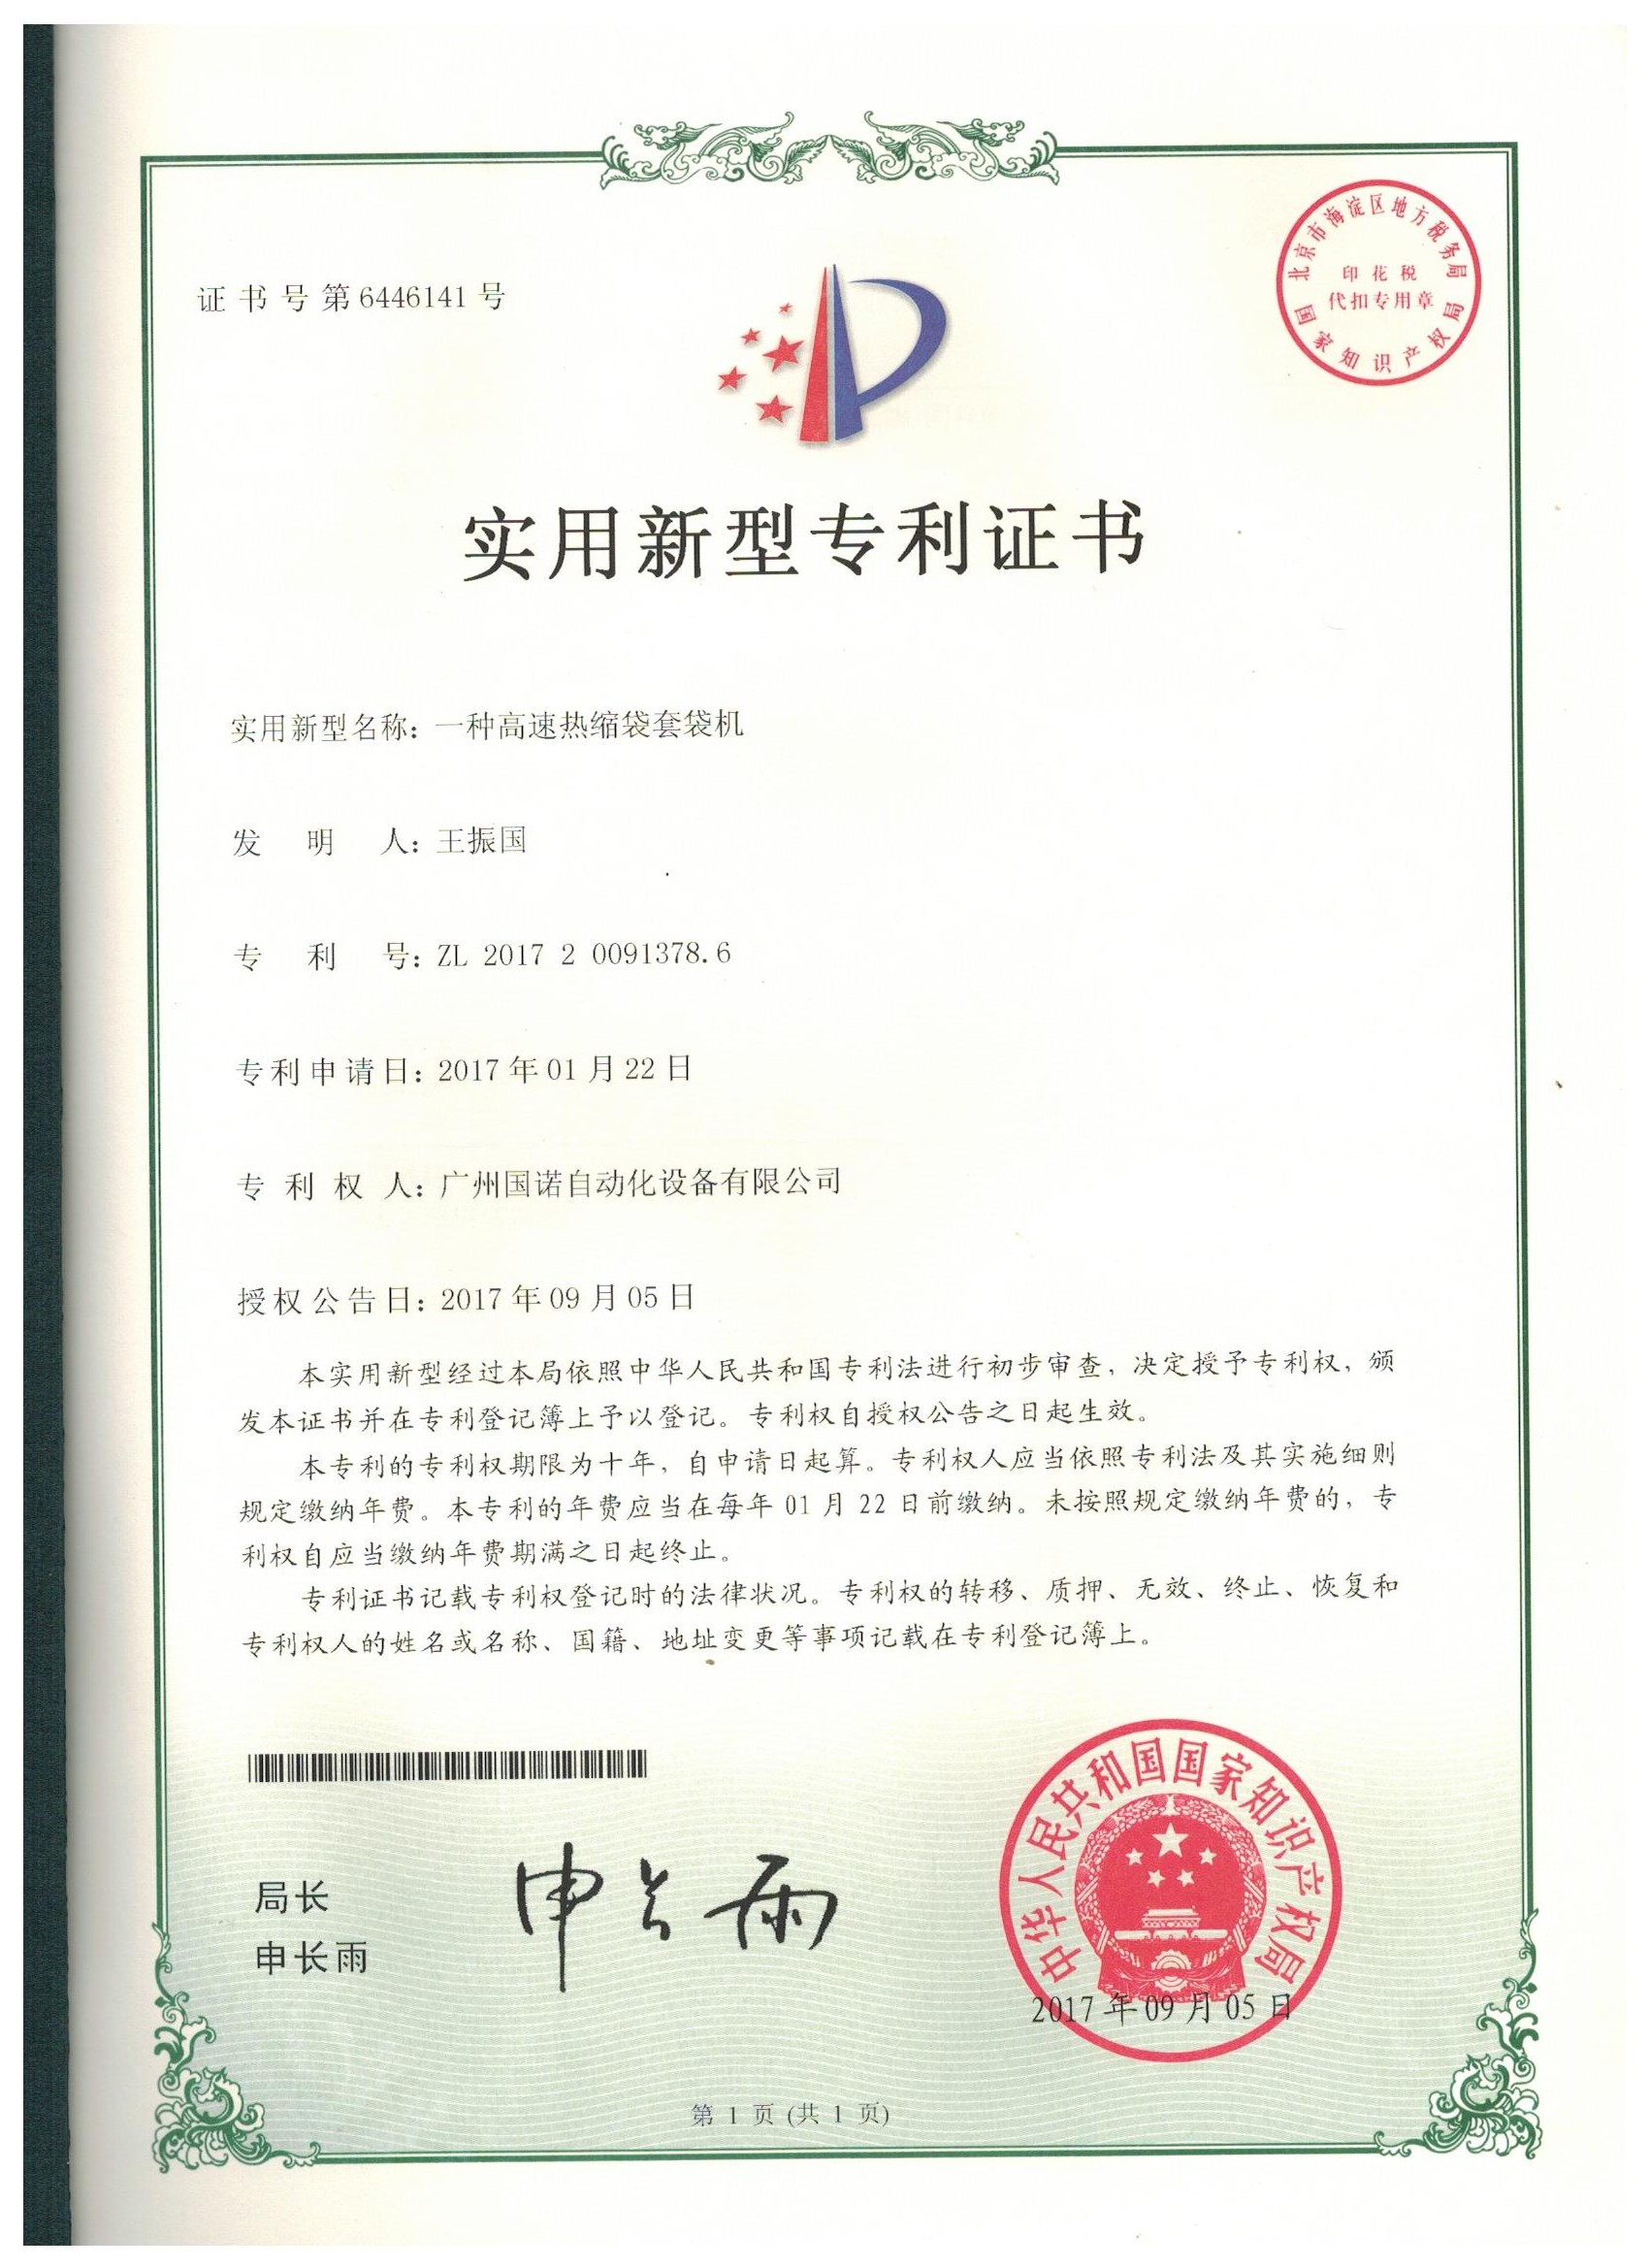 Auto Packing Machine Certificate